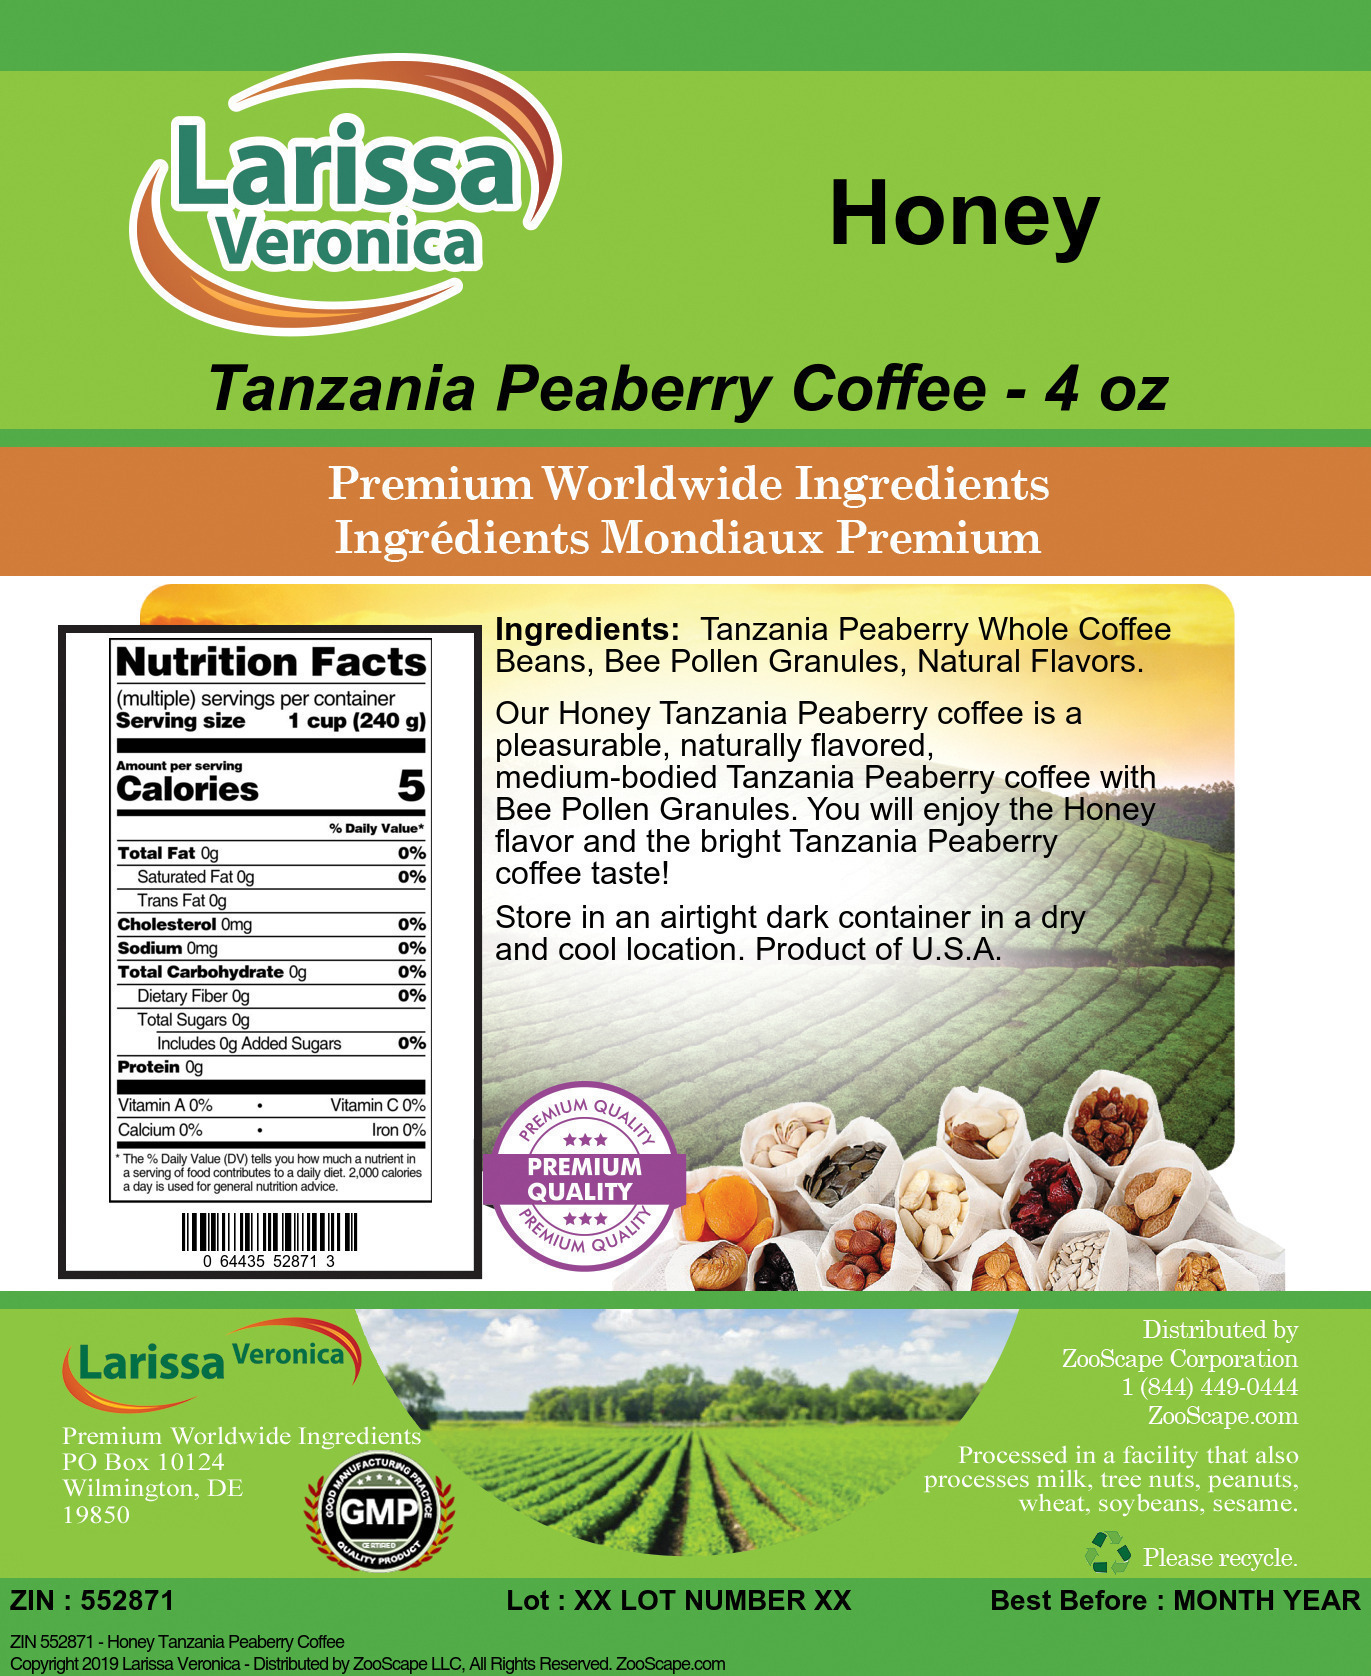 Honey Tanzania Peaberry Coffee - Label